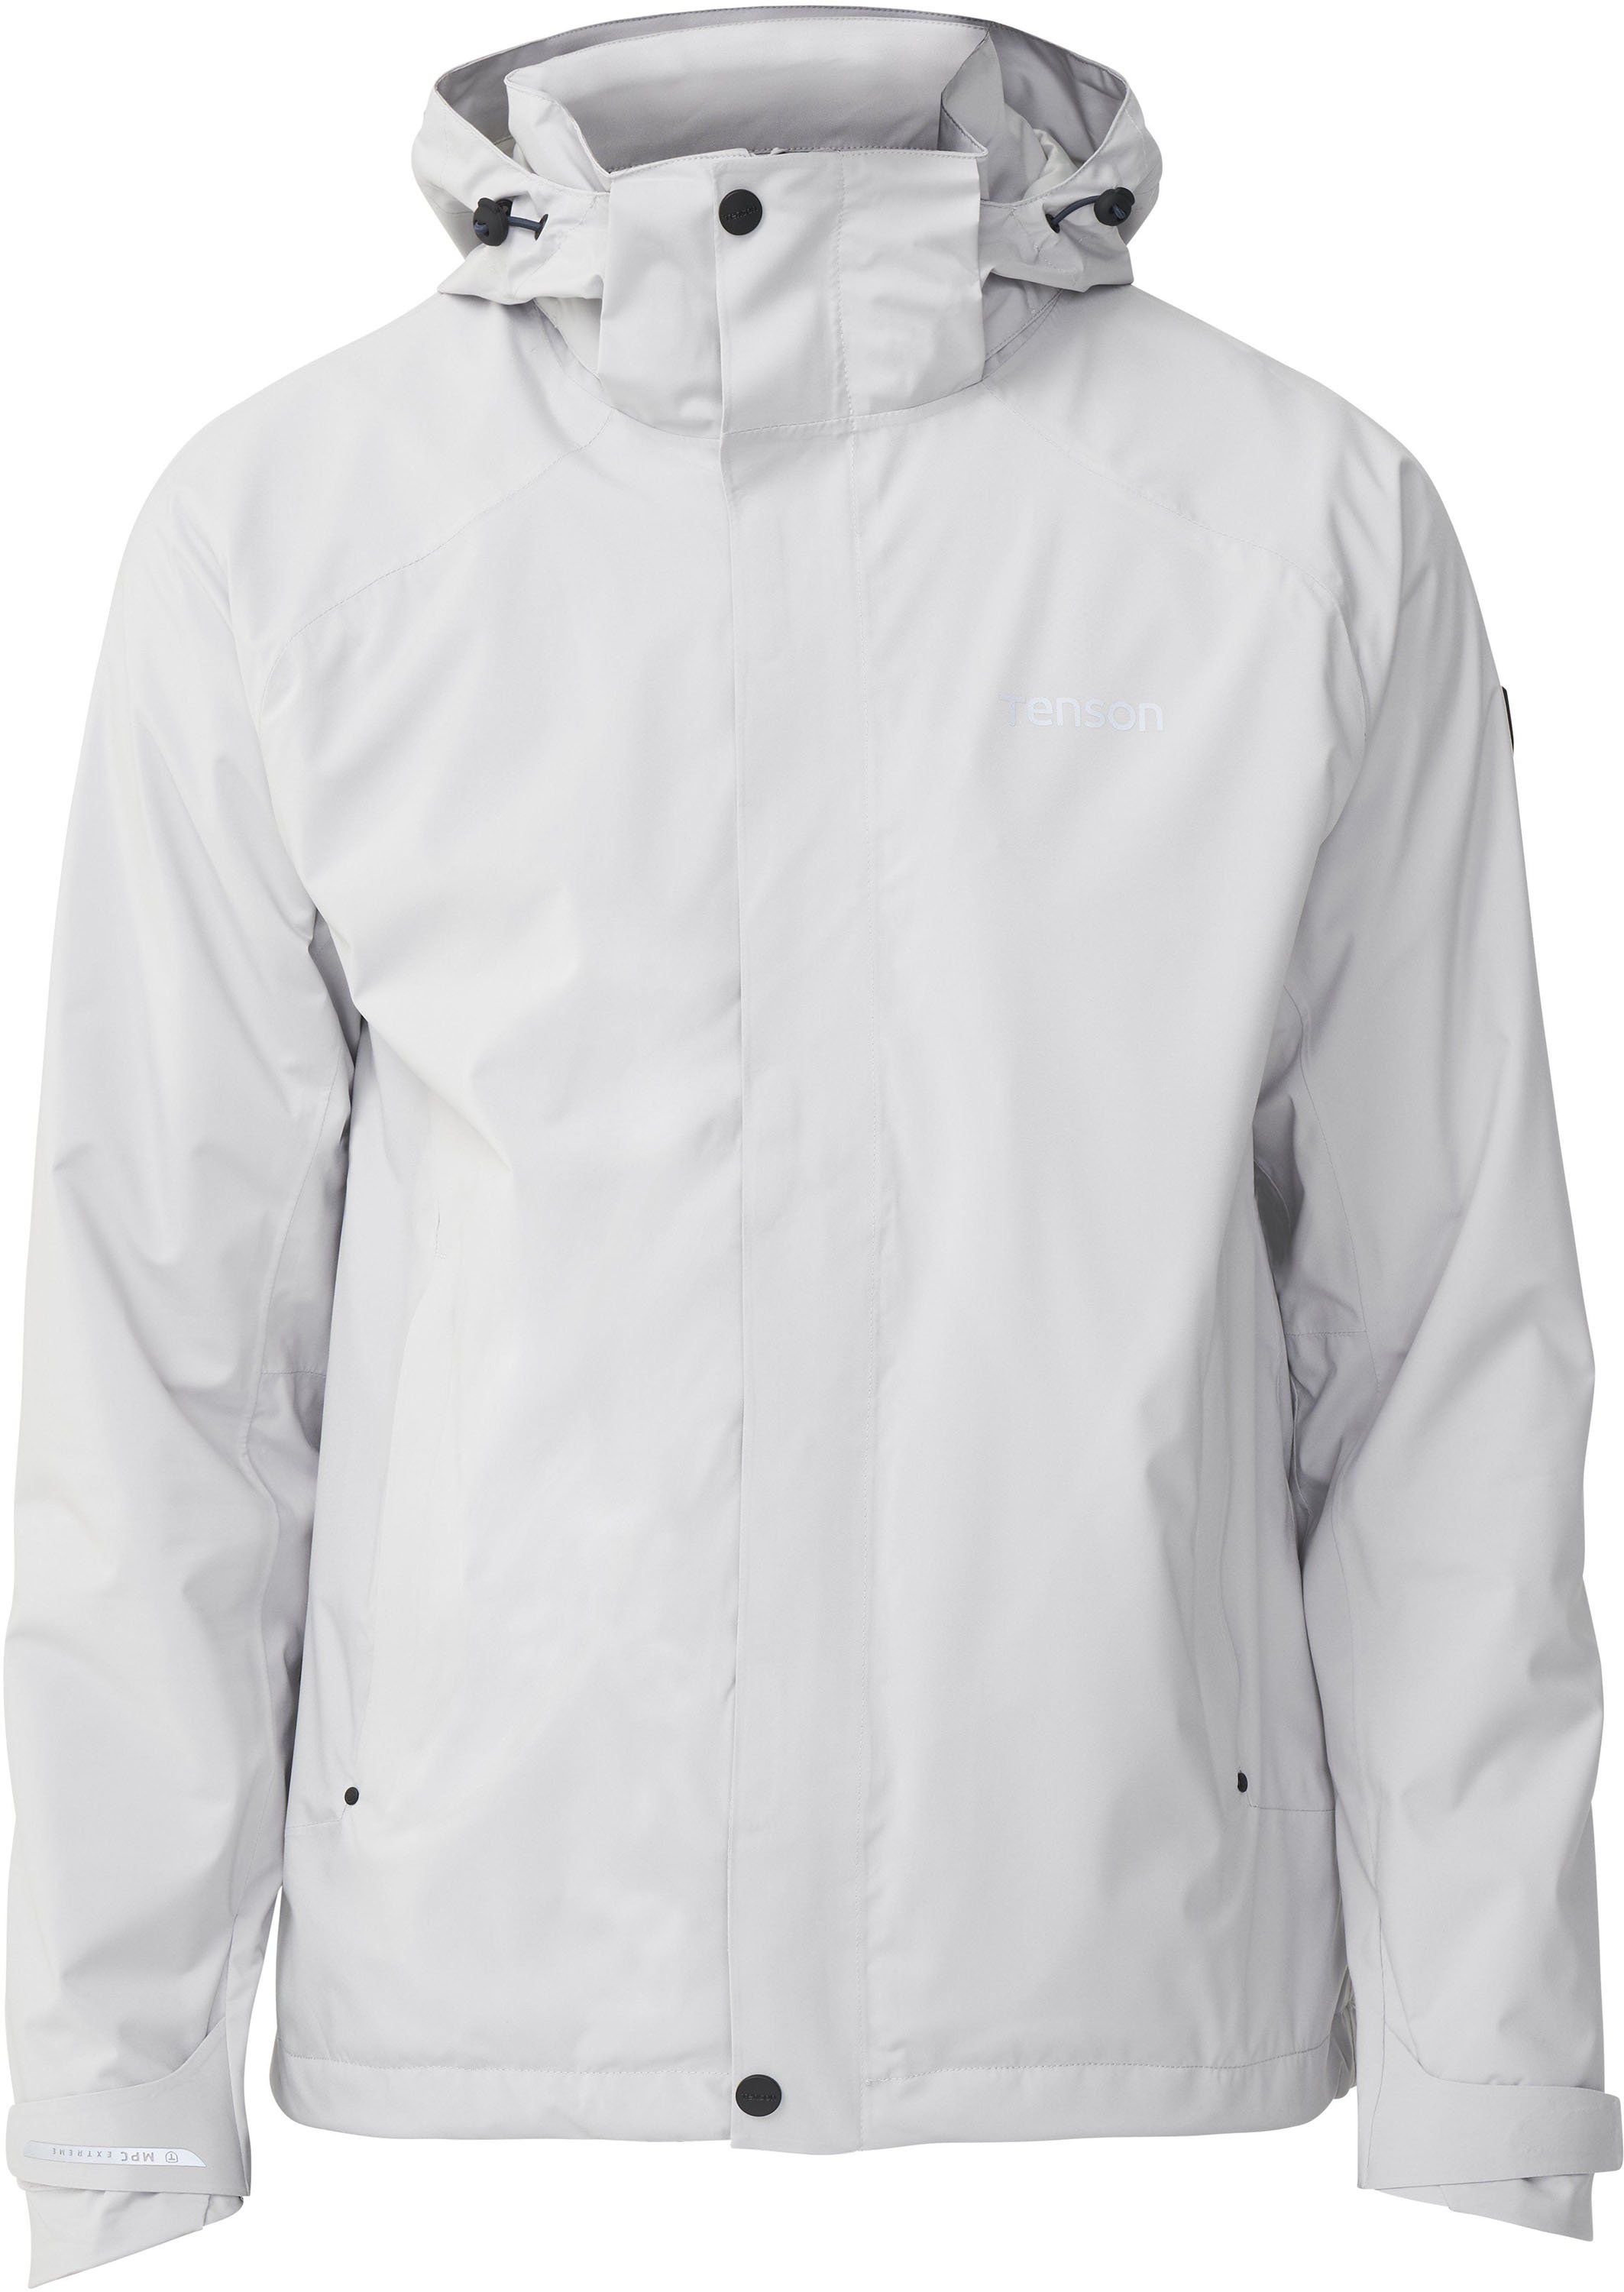 Tenson Biscaya Evo Jacket Grey size M